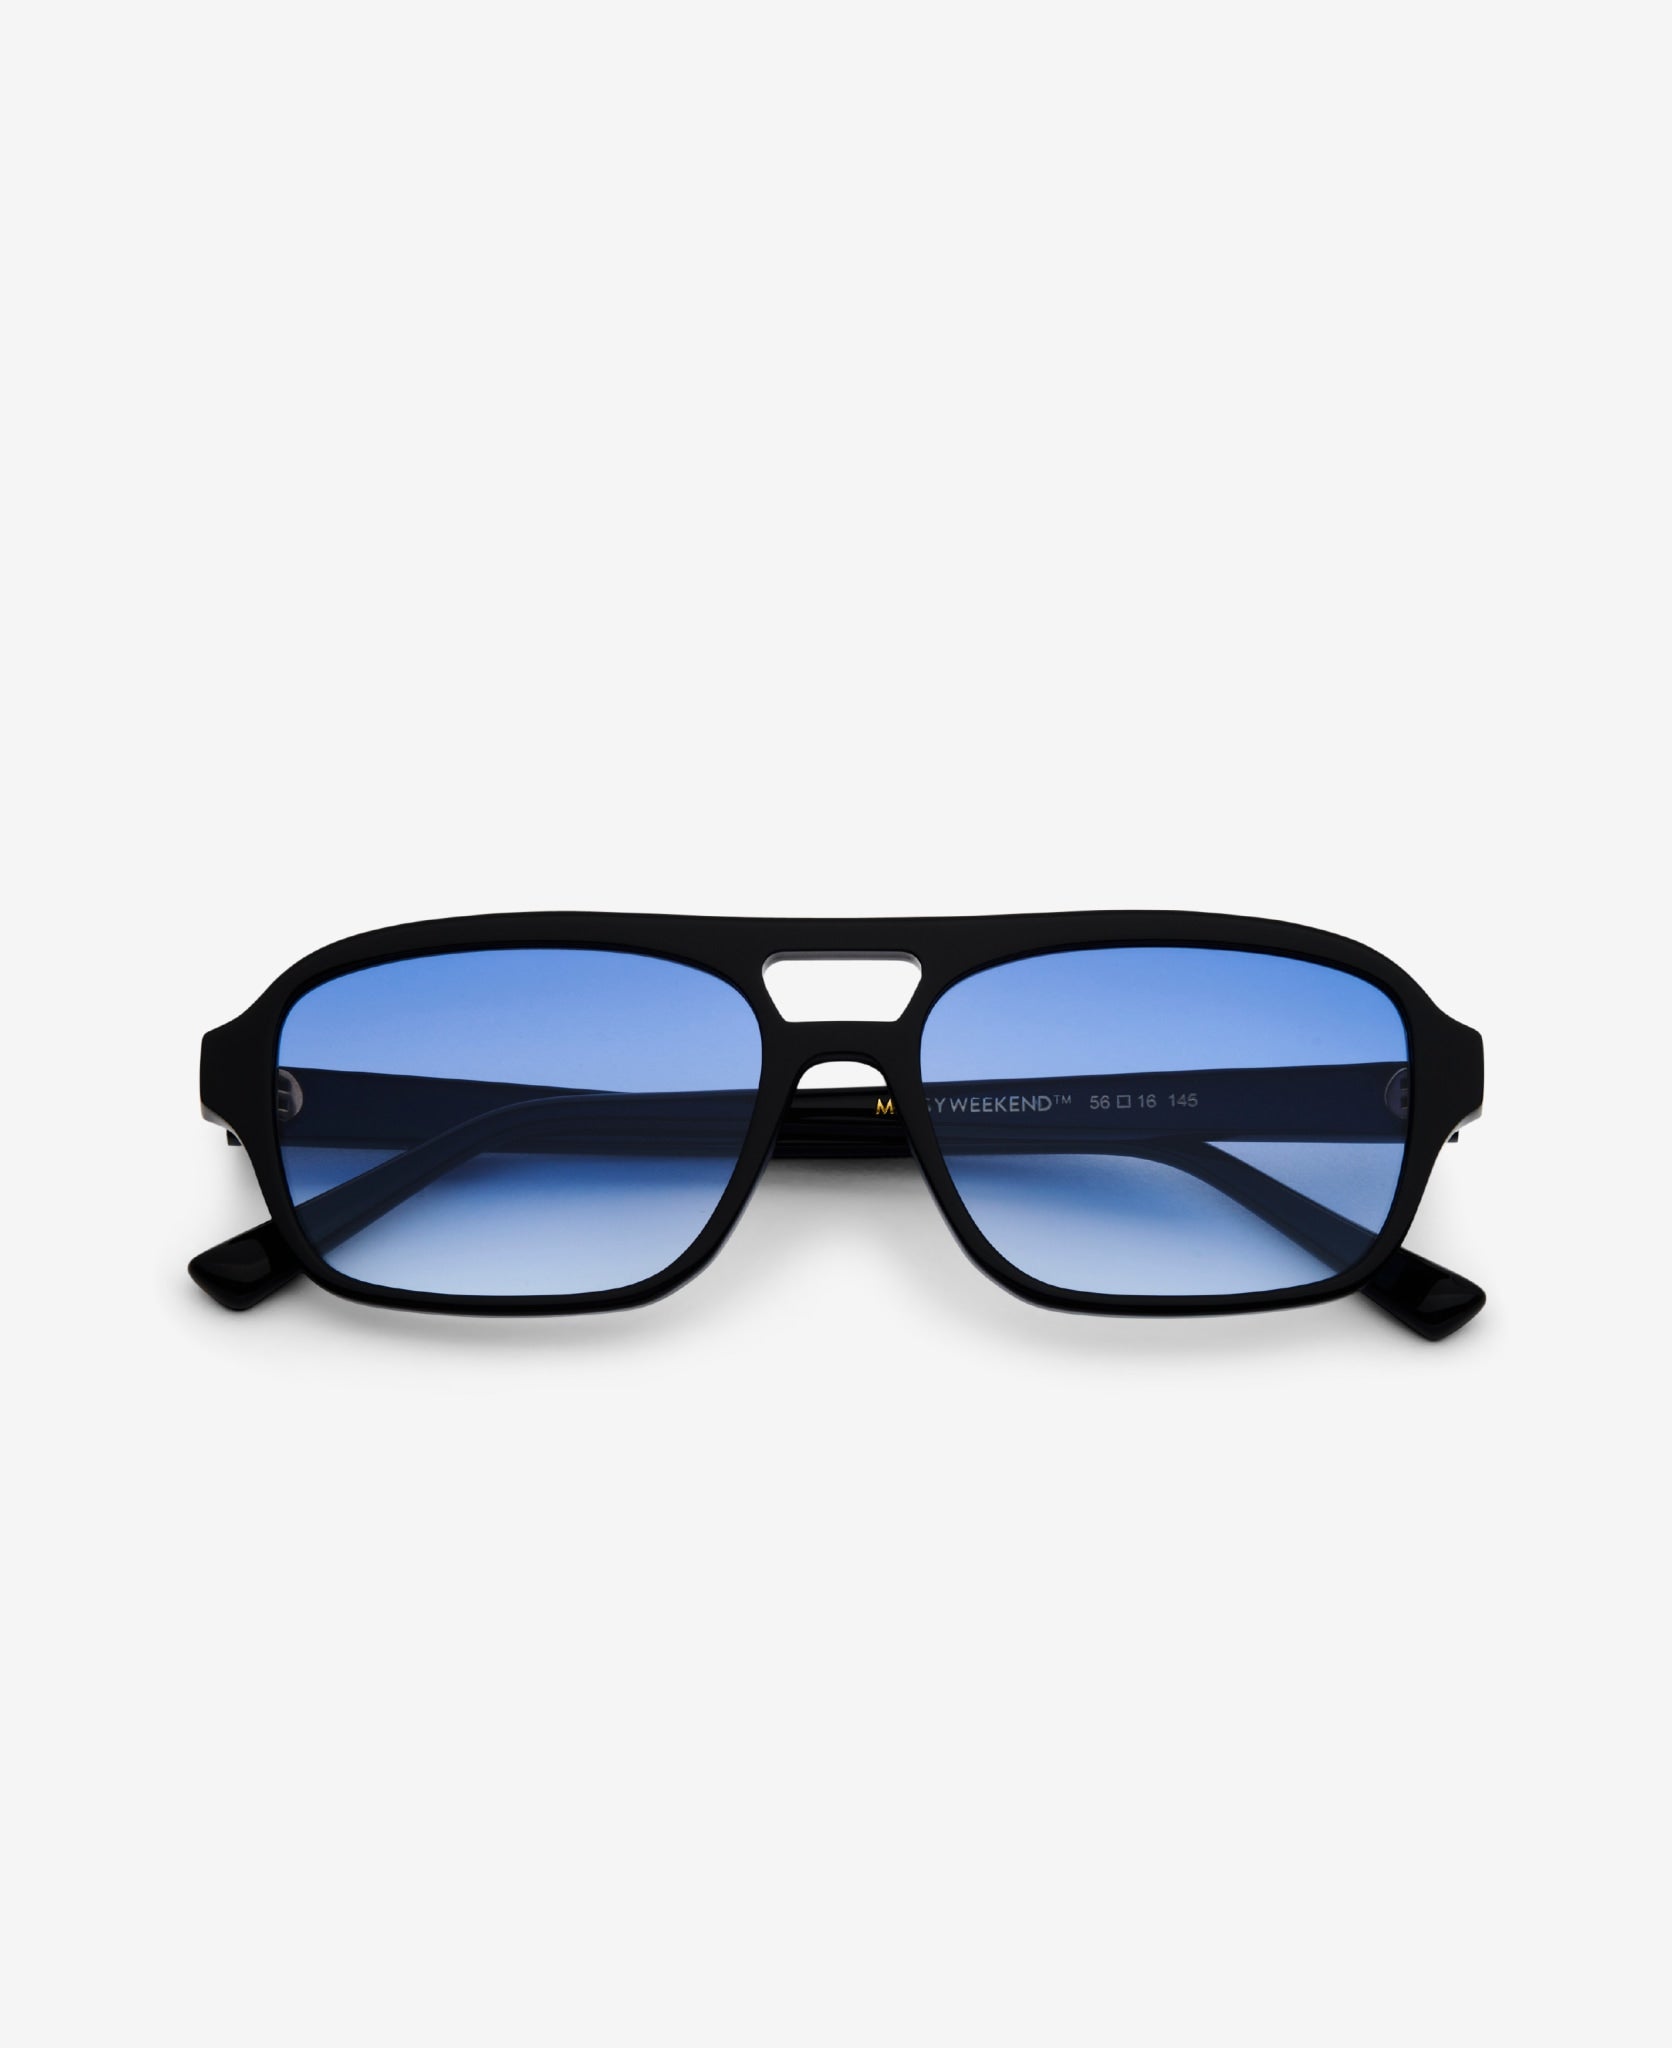 Sunglasses BURT |MESSYWEEKEND Aviator Blue Lens – Black -